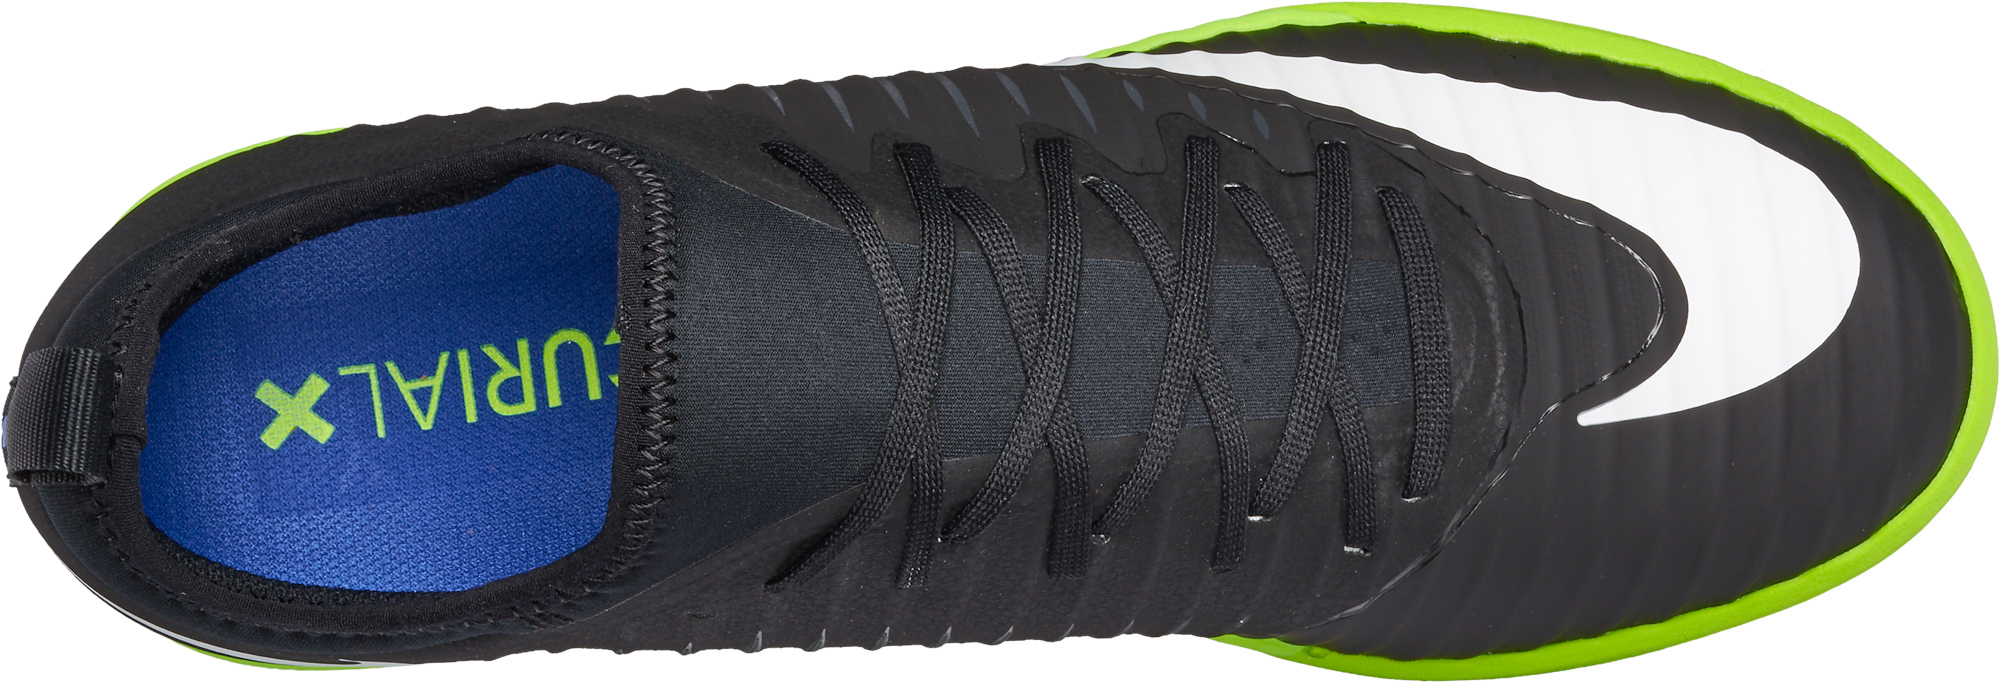 Nike MercurialX Finale II IC - Nike Indoor Soccer Shoes